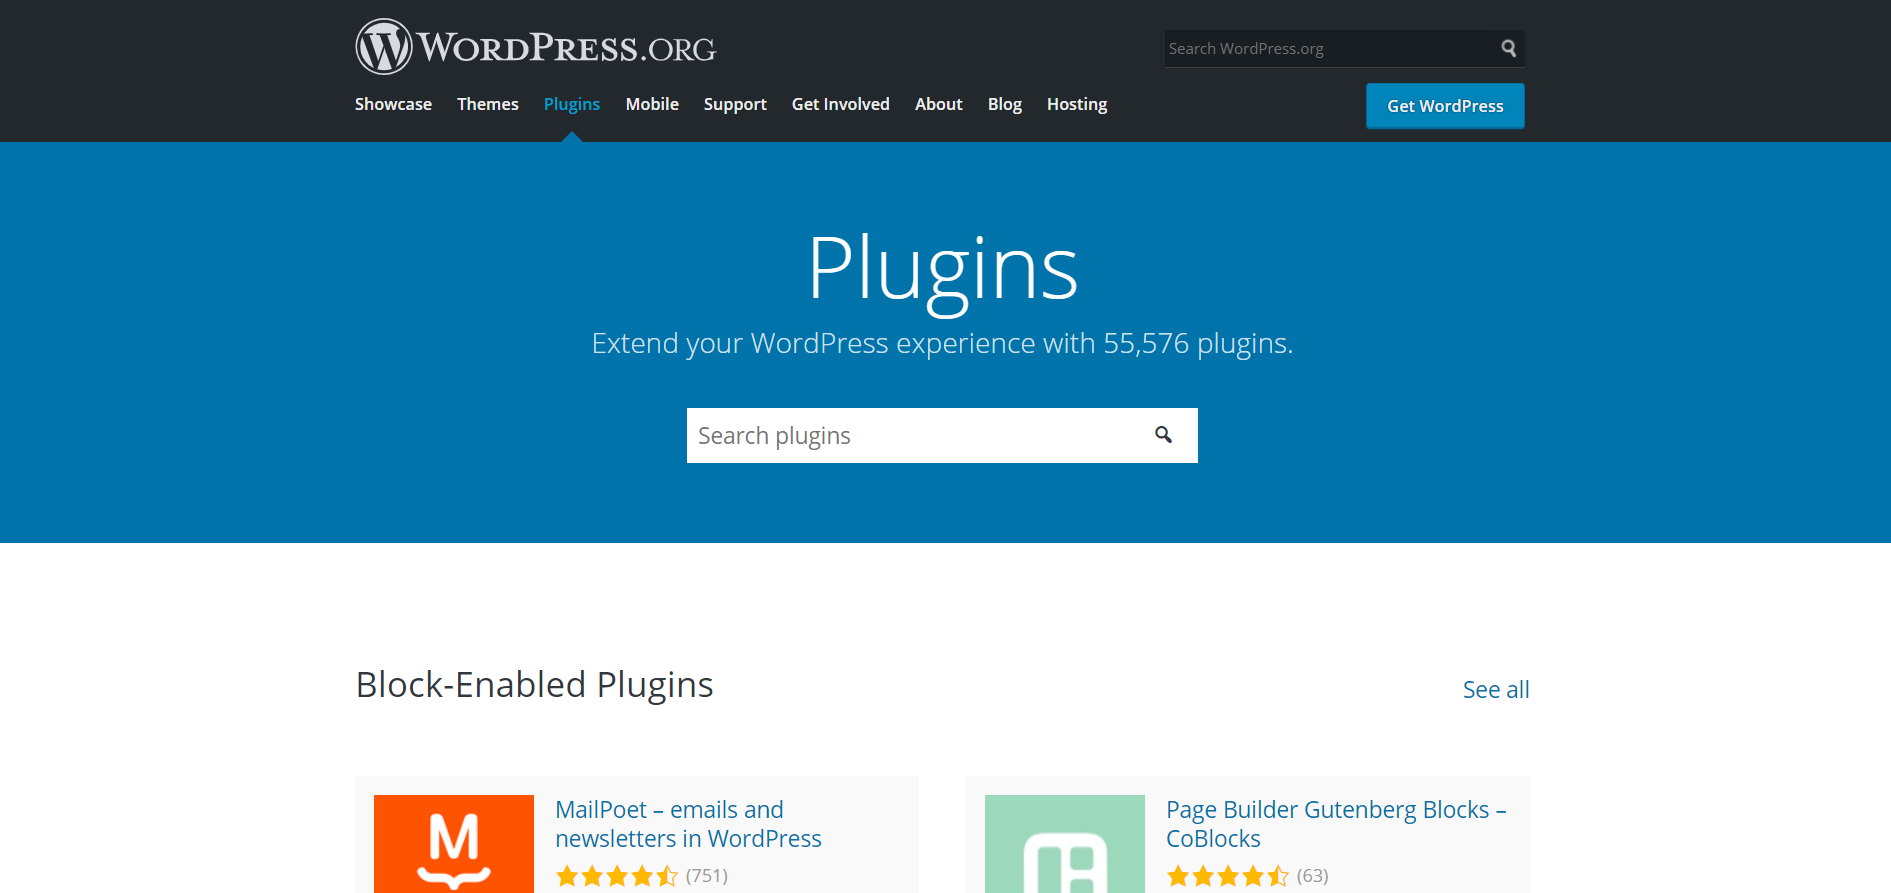 The WordPress plugins page